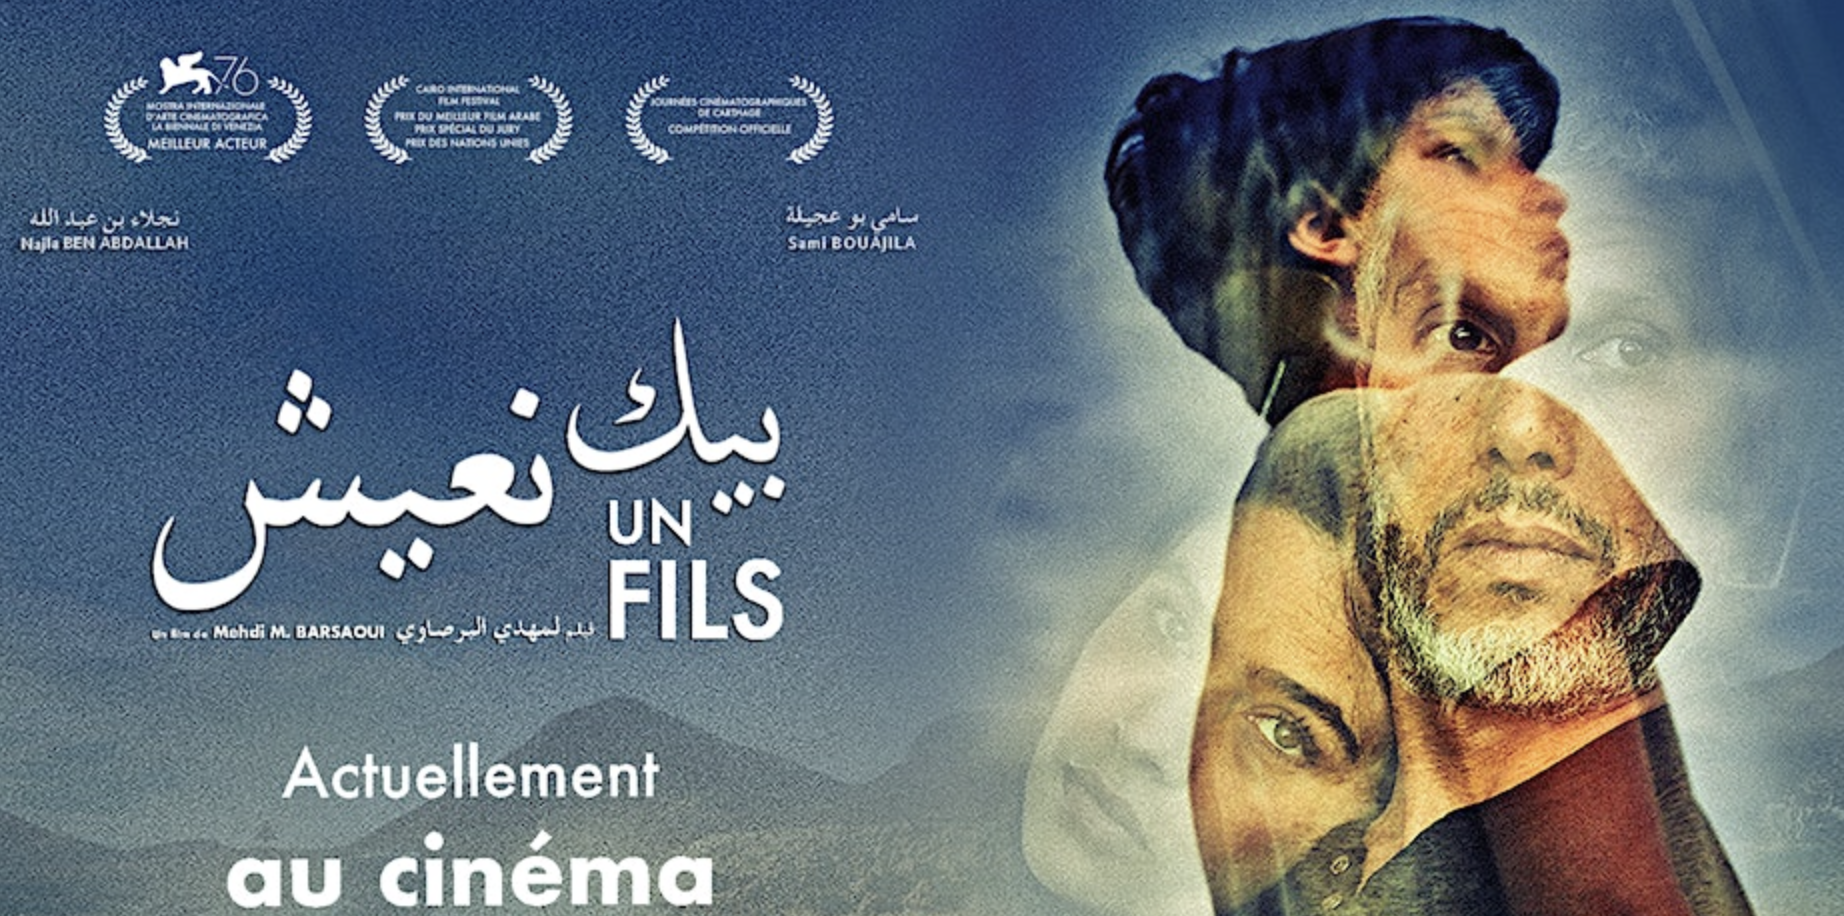 Screening of "A Son" Tunisian Film